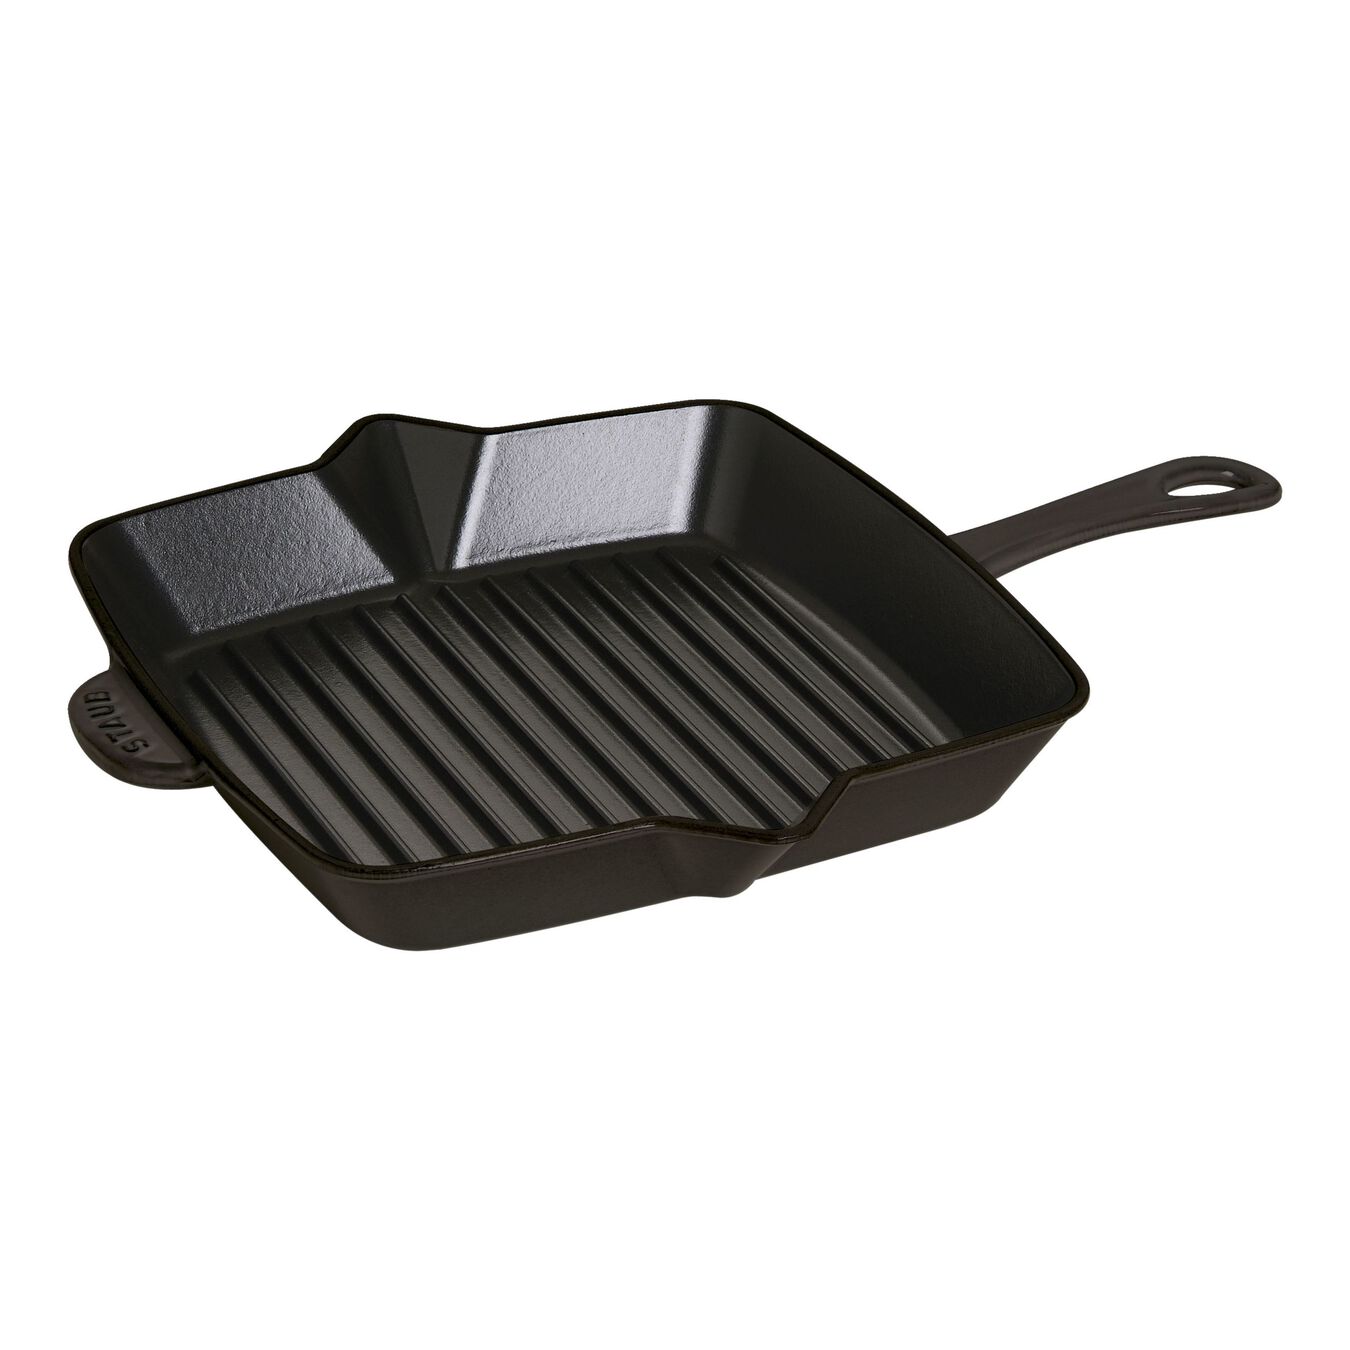 26 cm cast iron square American grill, black,,large 1